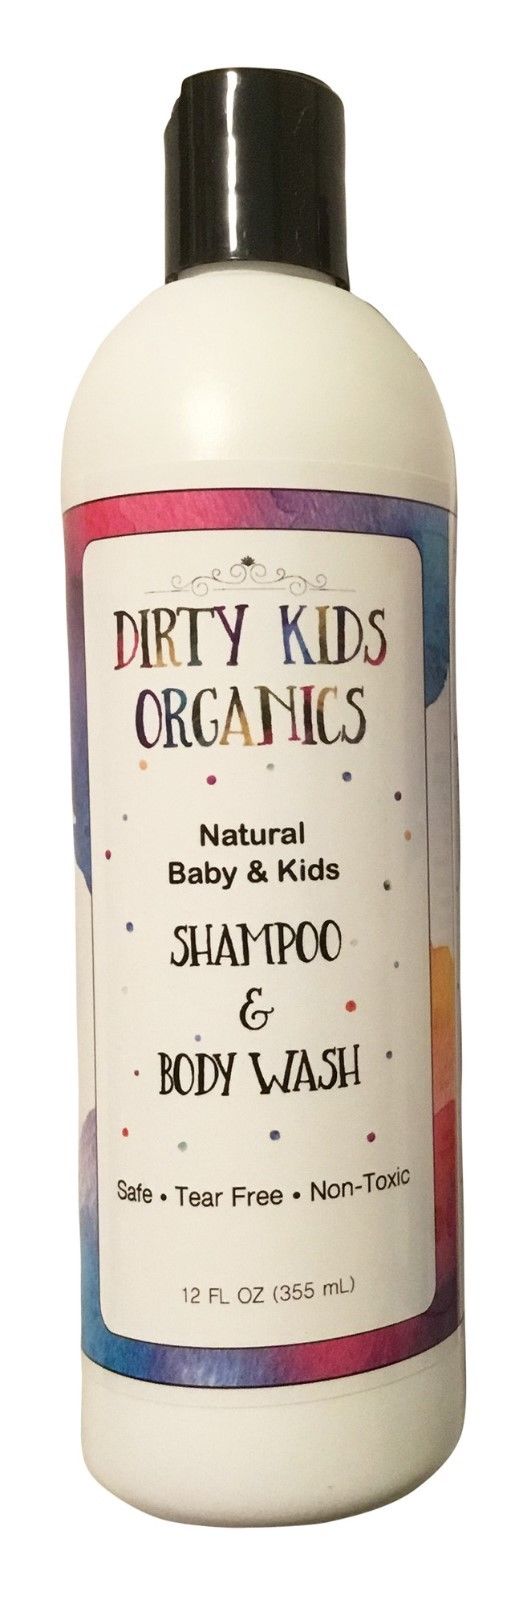 Non-Toxic *TEAR FREE* Natural ORAGANIC KID / Baby Body Wash Soap & Shampoo 12 oz